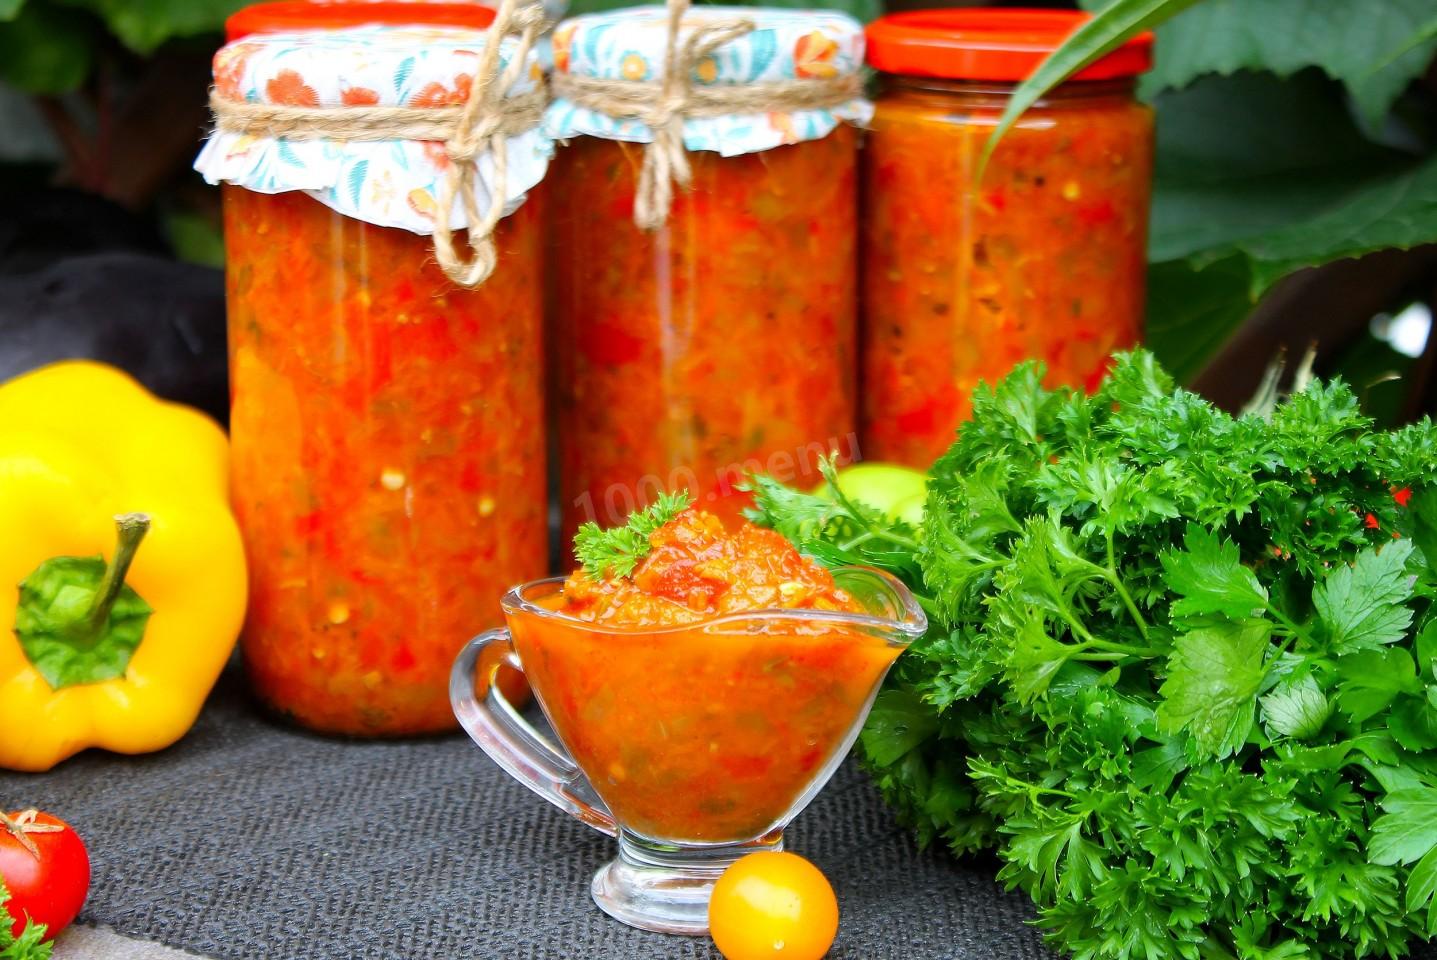 Лютеница по-болгарски: рецепт на зиму с баклажанами и морковью, с фото и видео